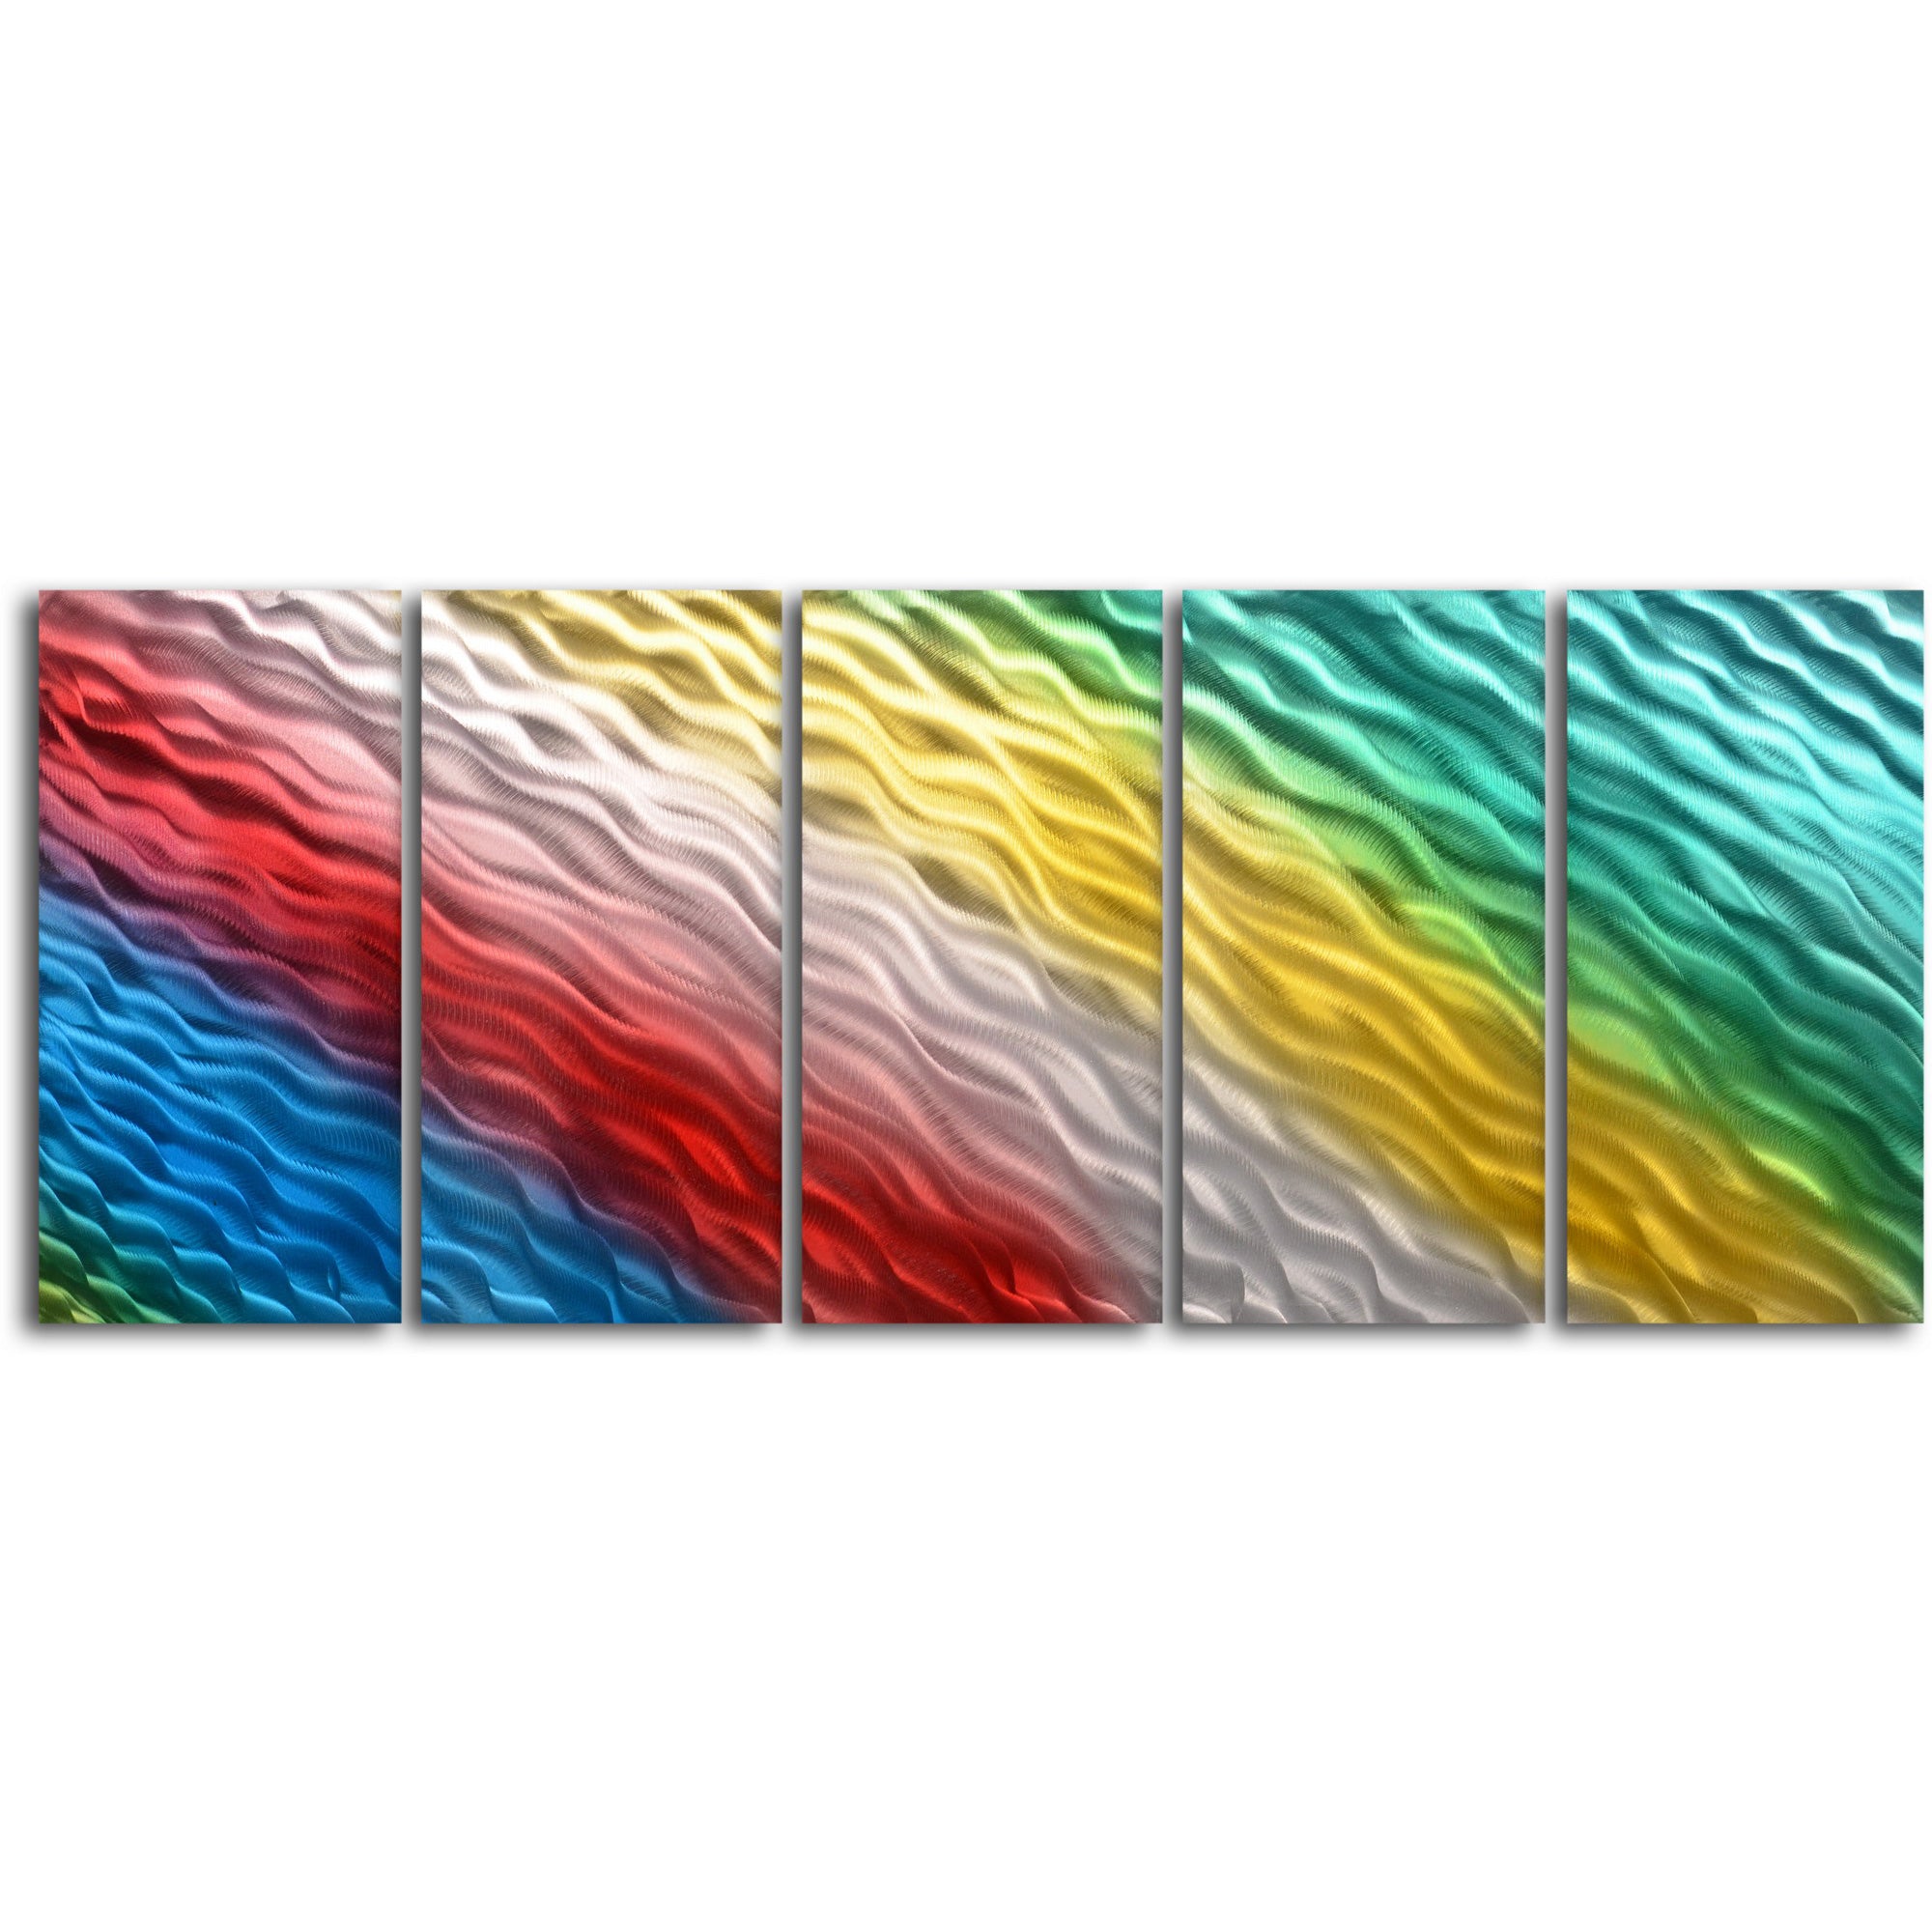 "Rainbow ripples" 5 Piece Contemporary Handmade Metal Wall Art Set